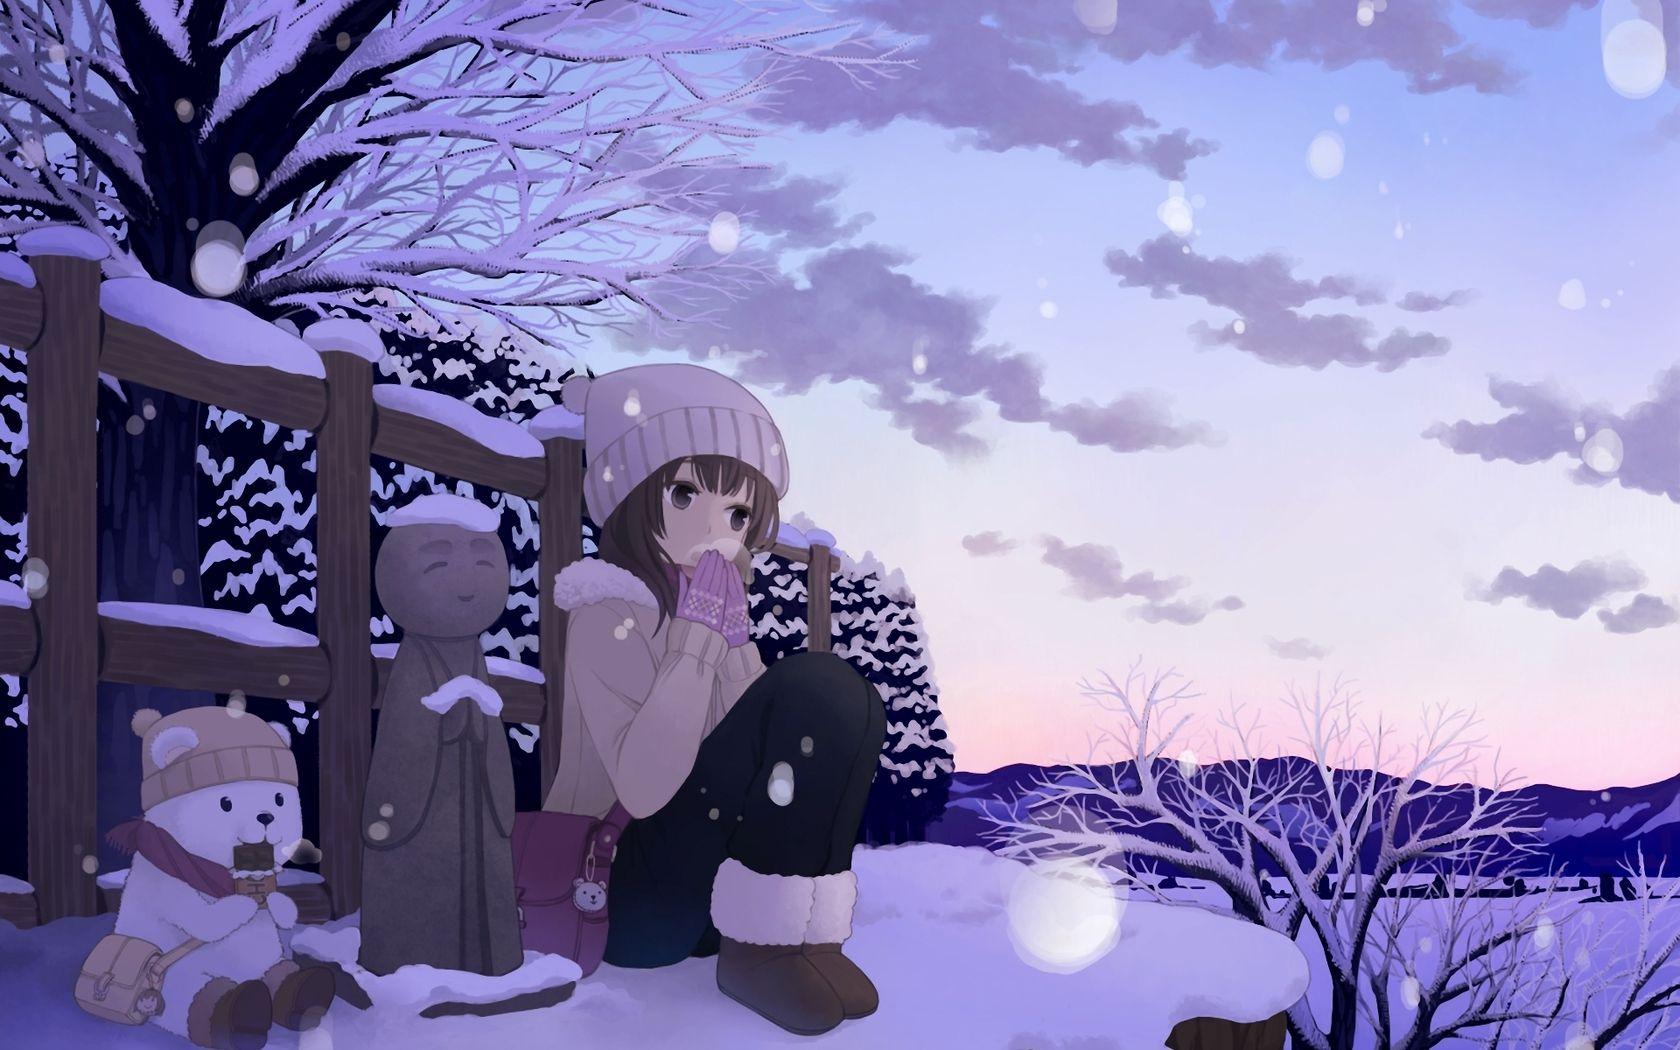 Anime Winter Wallpaper 42573 1680x1050 px. Anime art beautiful, Winter wallpaper, Anime christmas